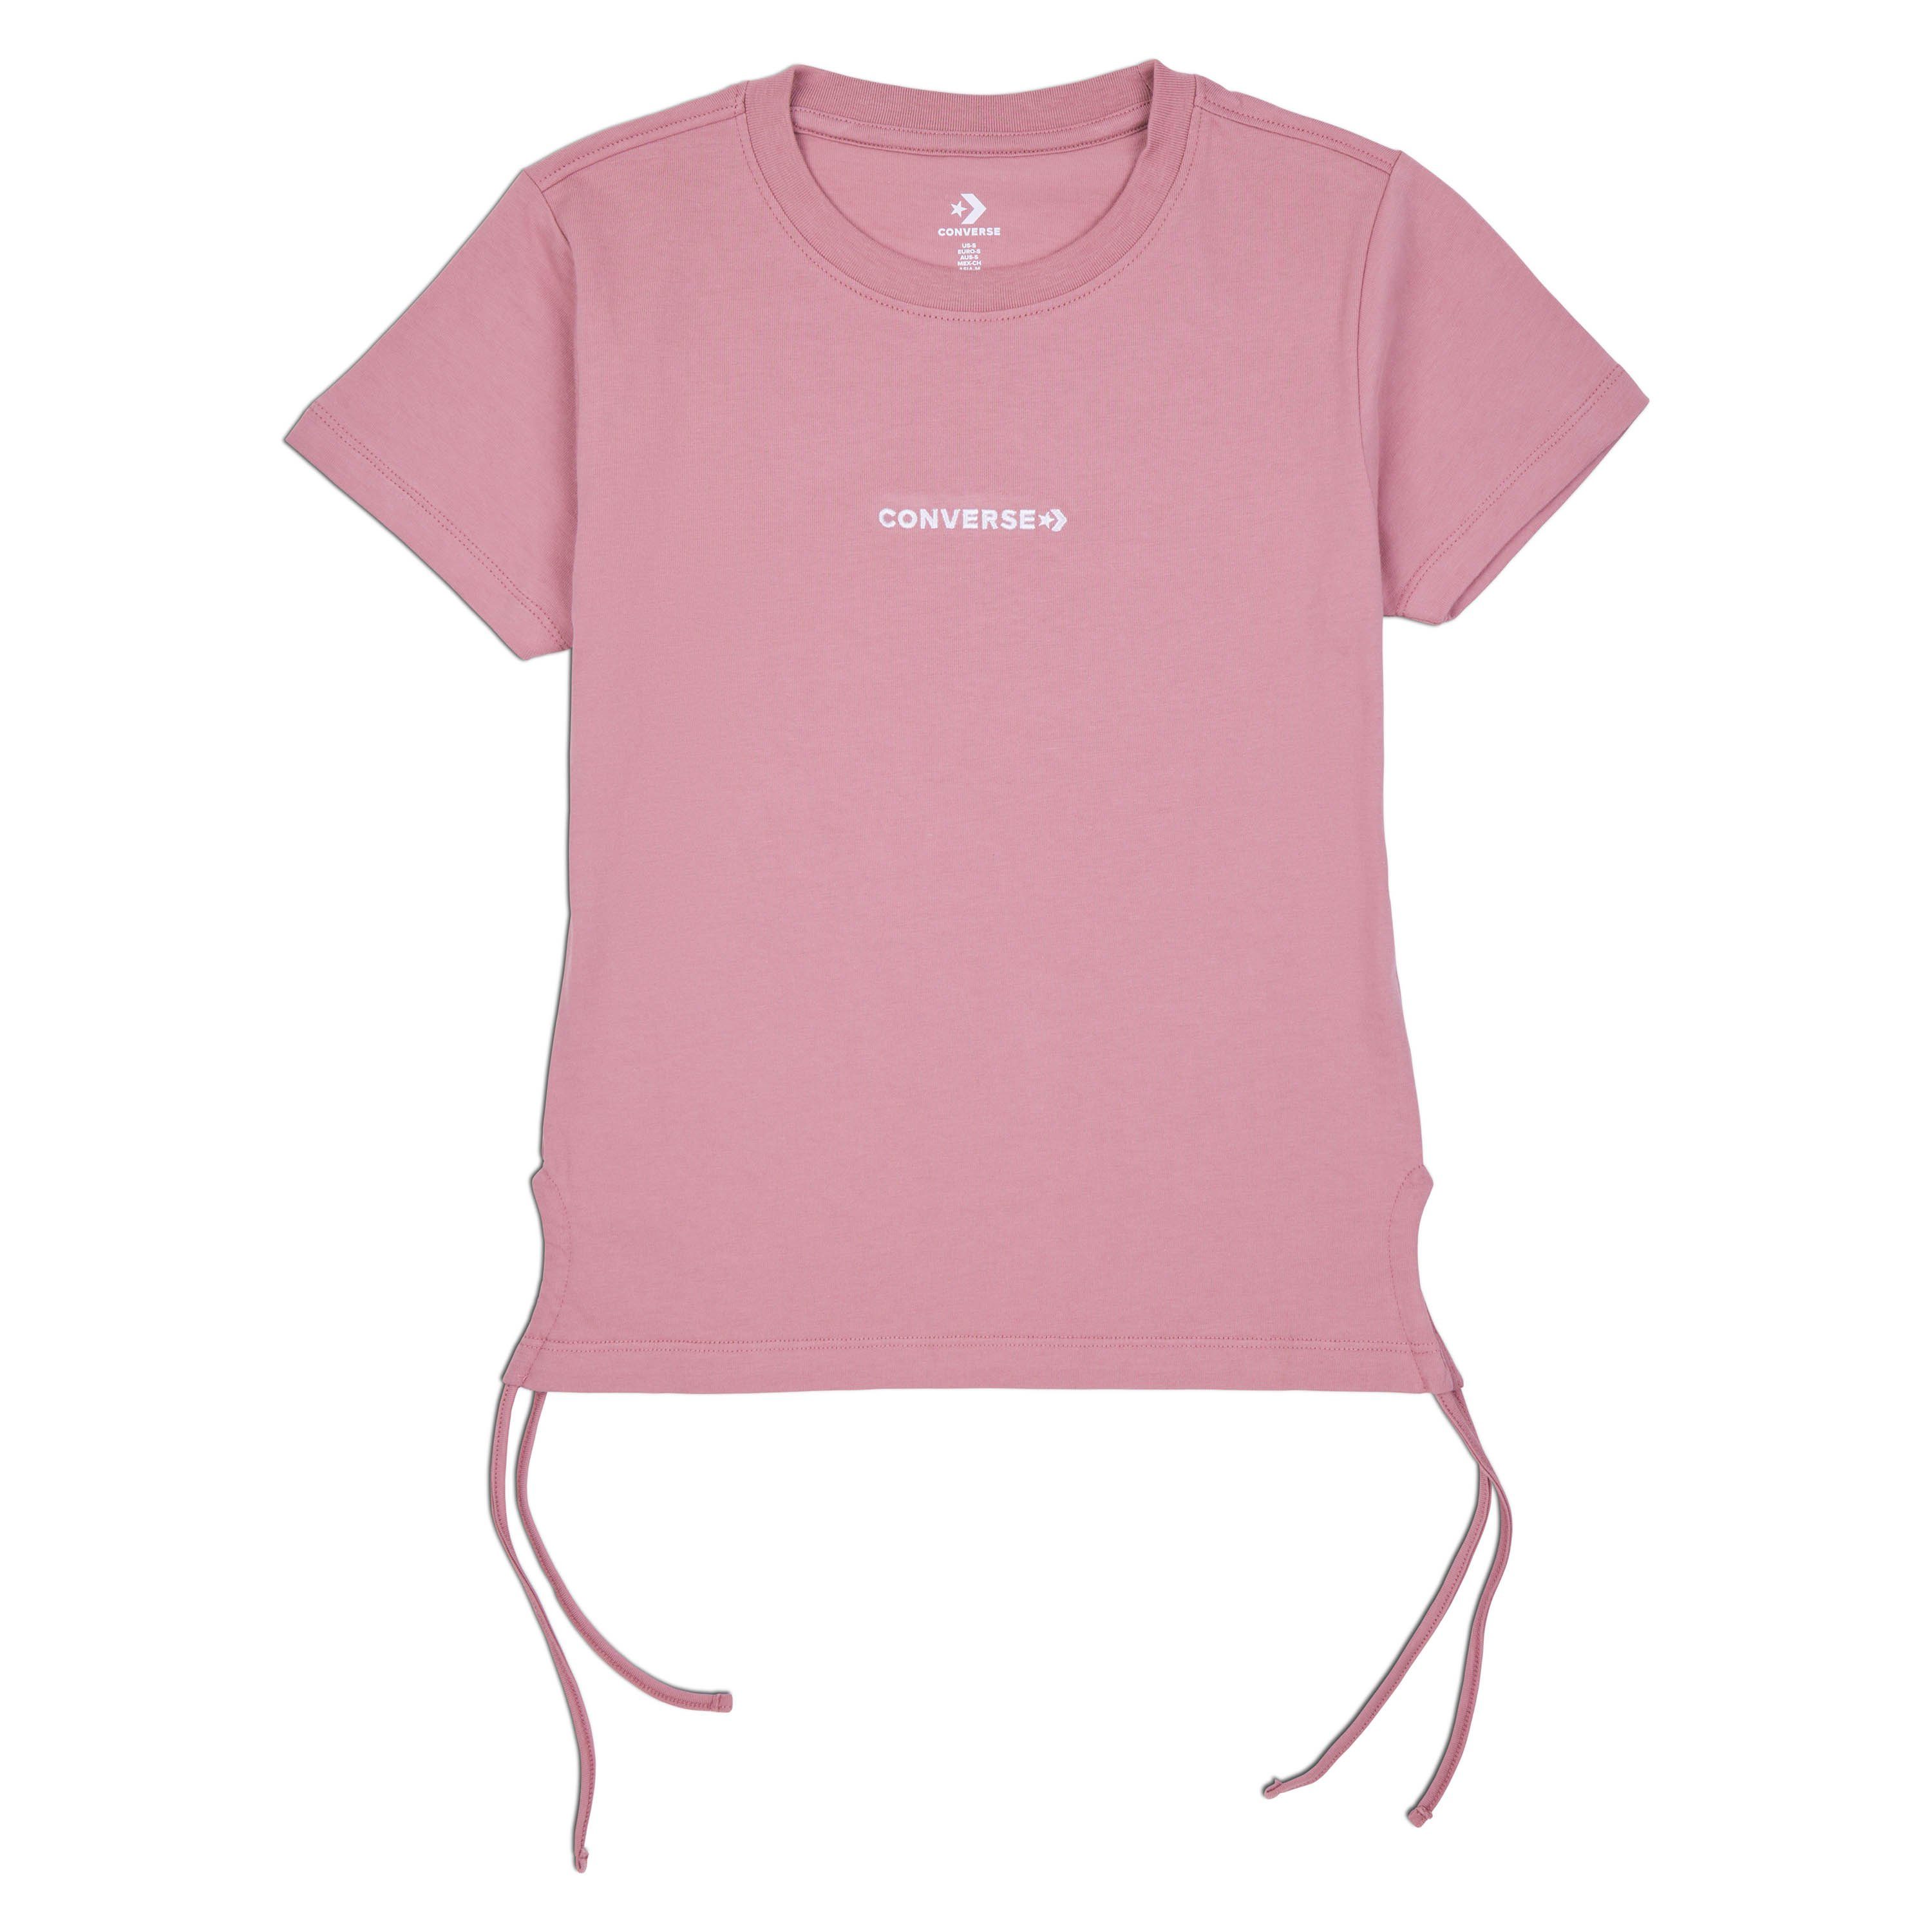 flamingo FASHION Converse night WORDMARK TOP T-Shirt NOVELTY